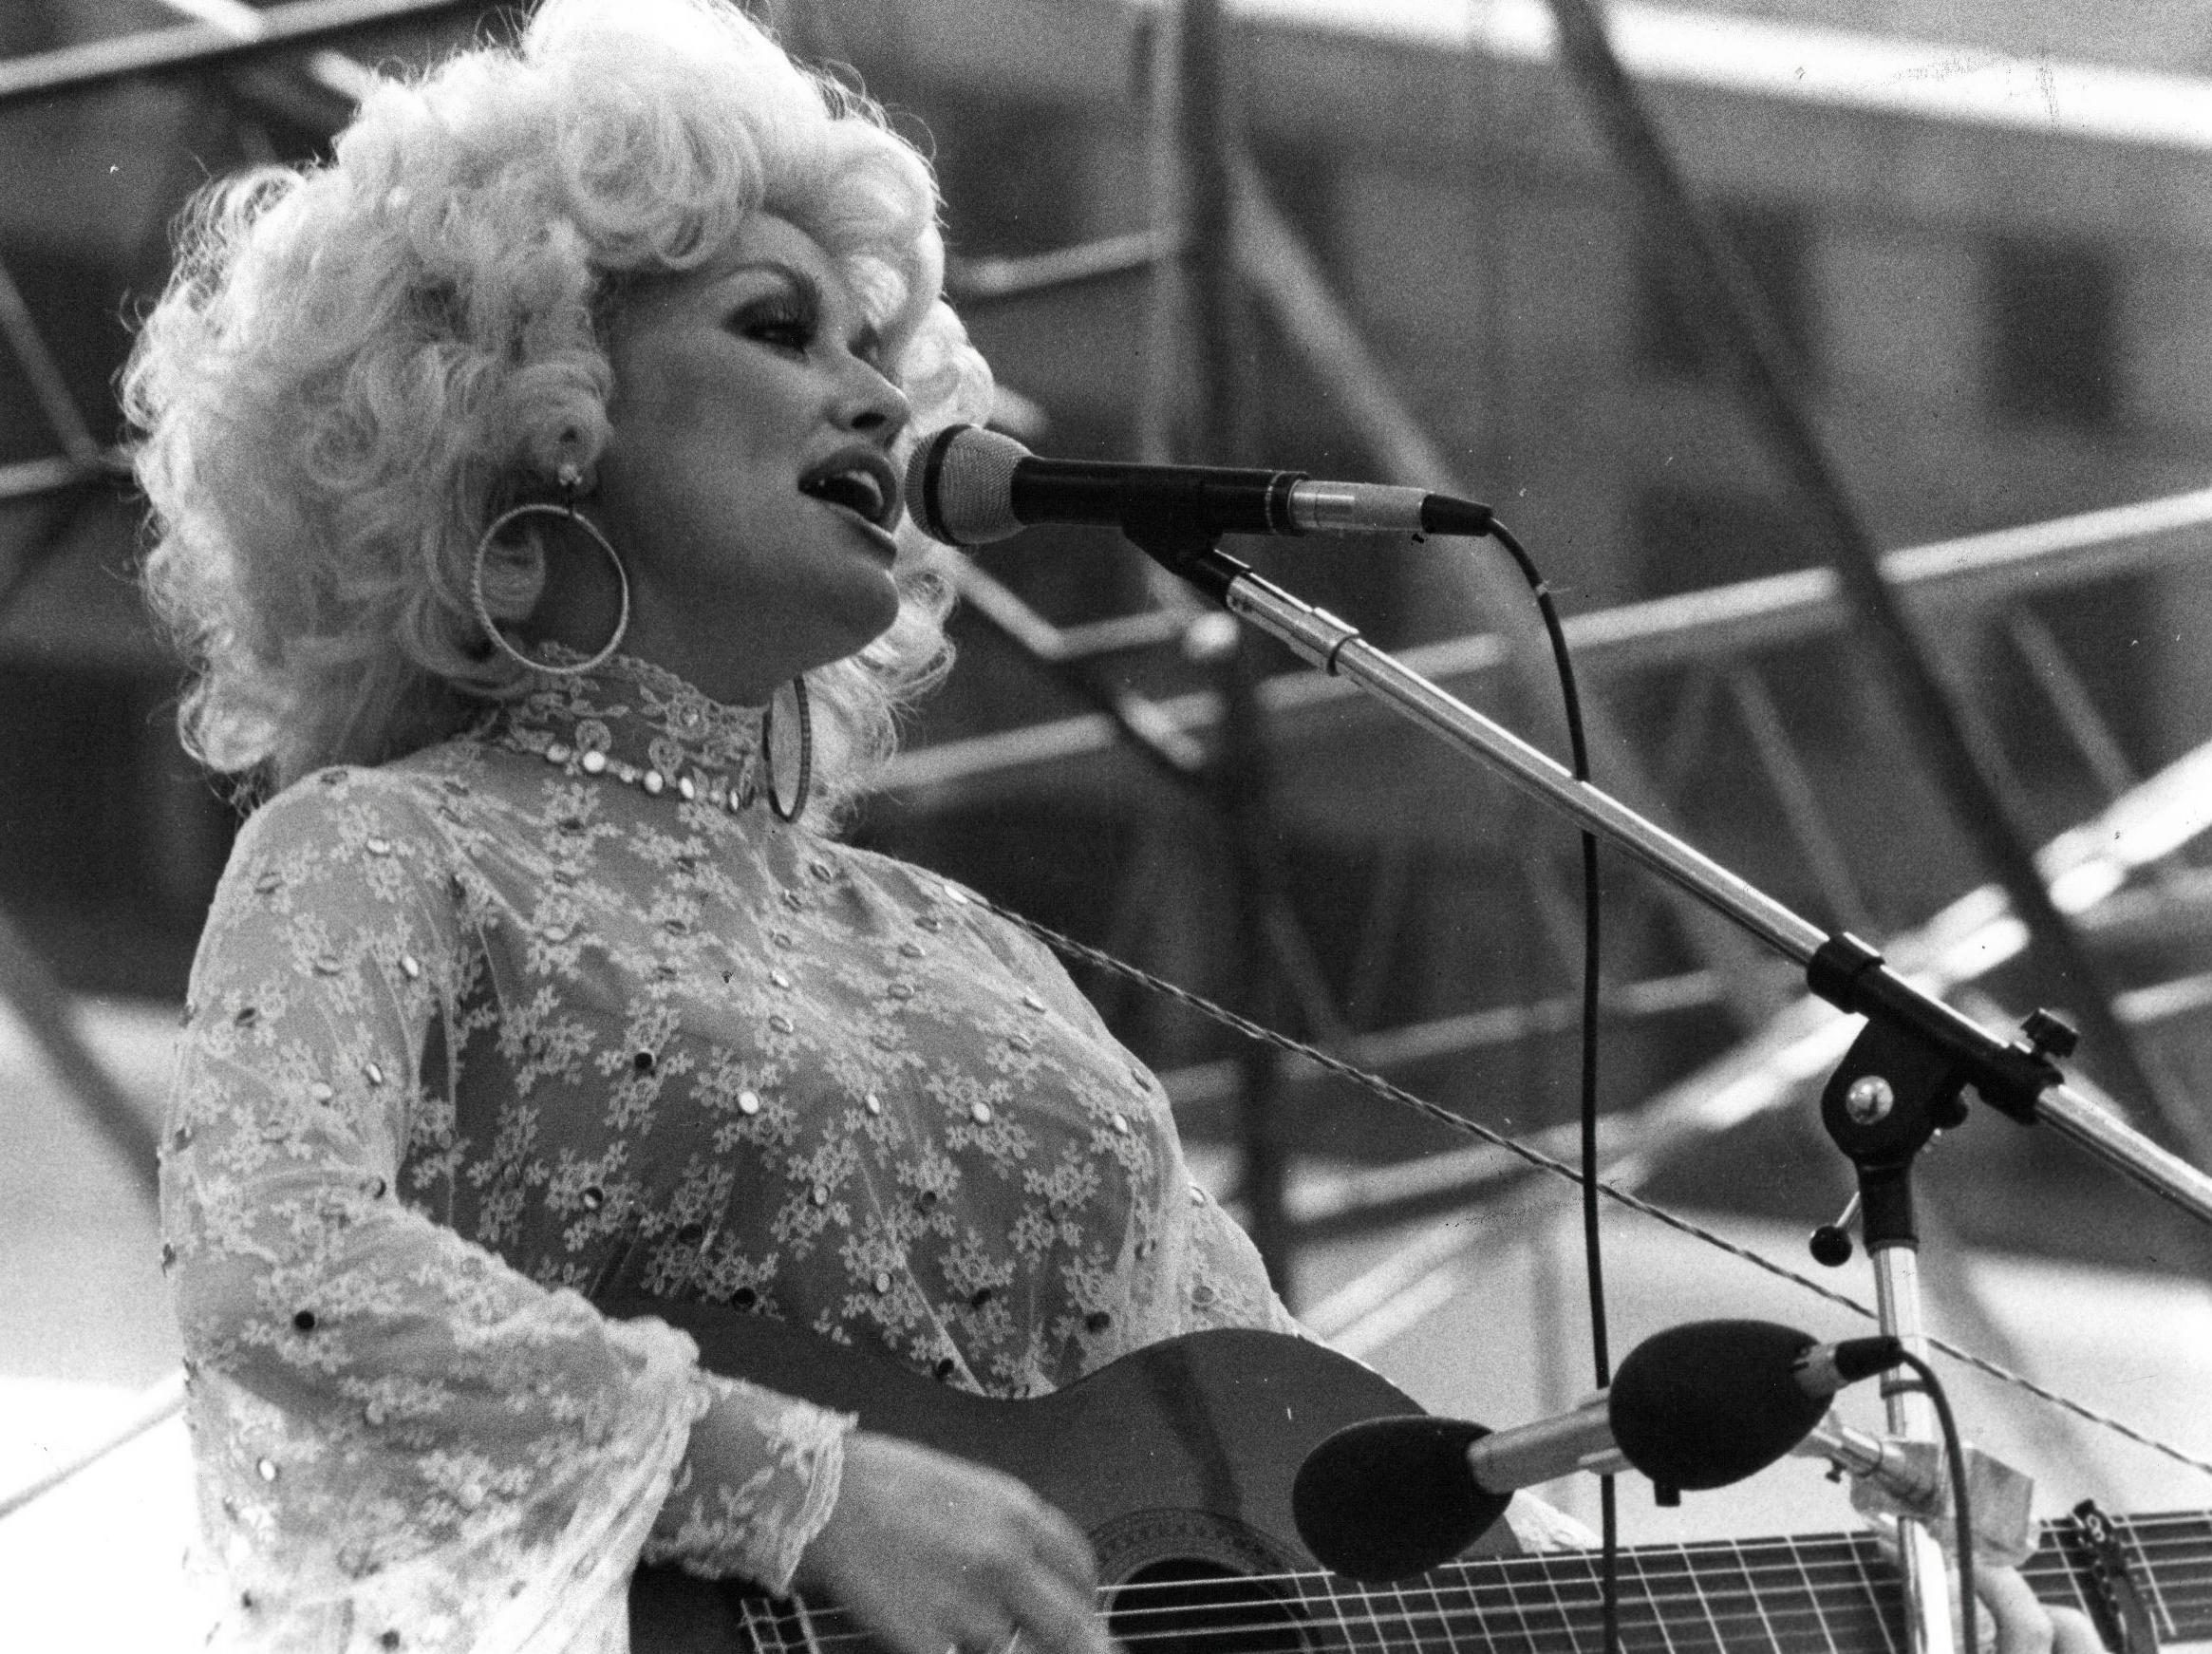 Chris Walter Portrait Photograph - Dolly Parton Performing on Stage Vintage Original Photograph